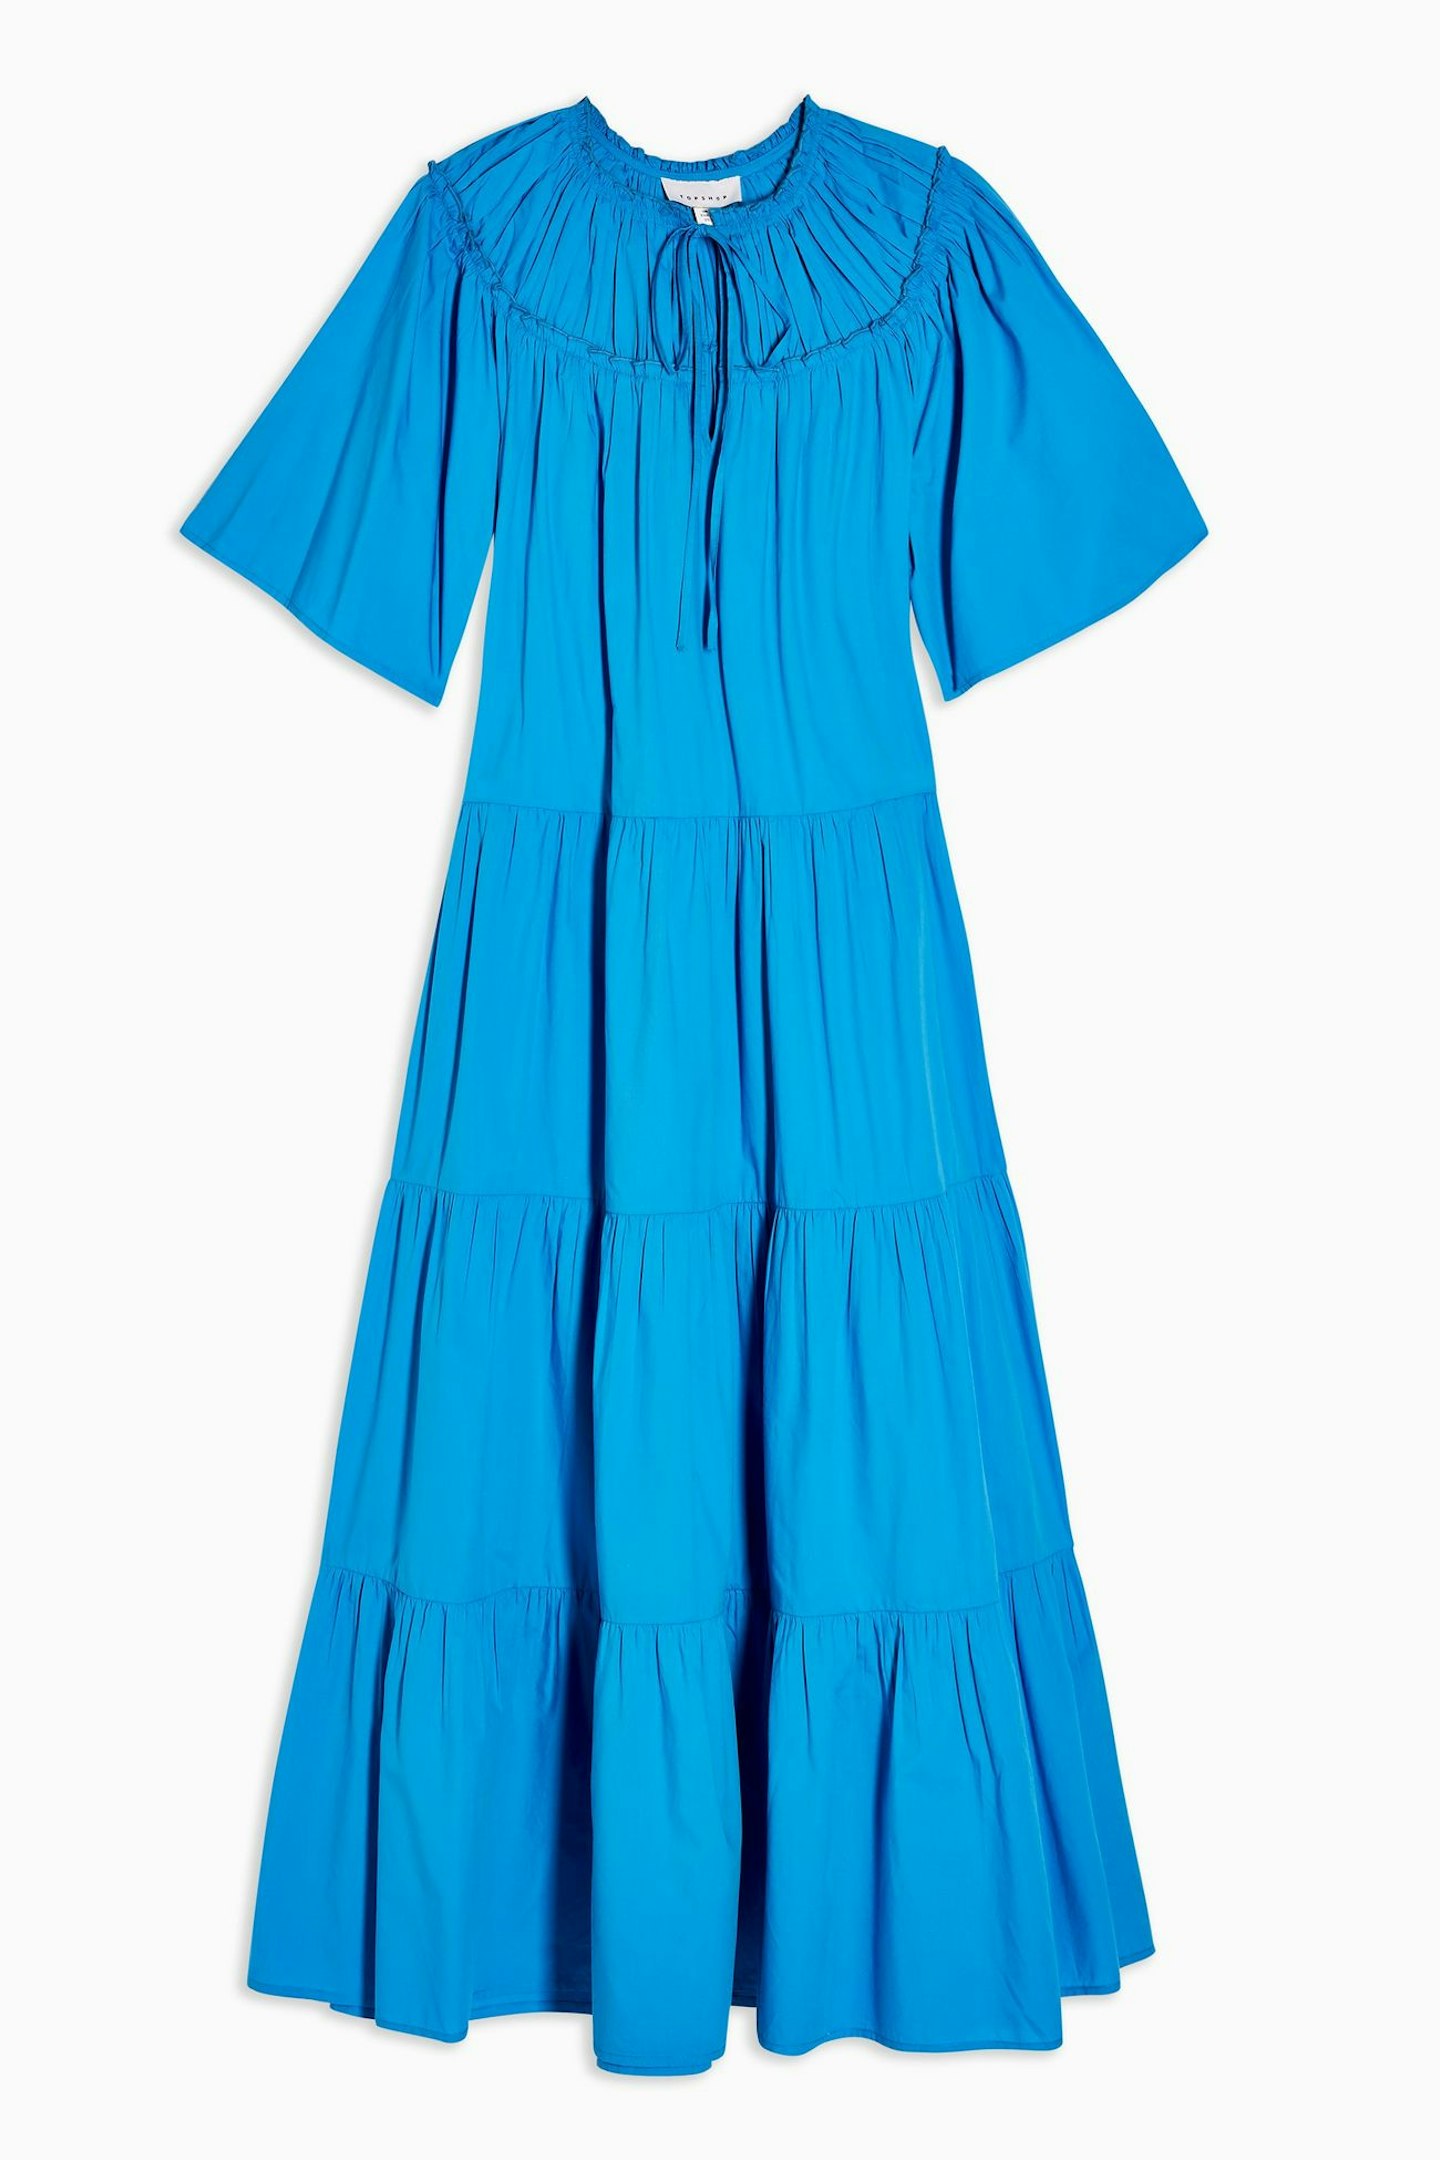 Topshop, Blue Poplin Smock Midi Dress, £39